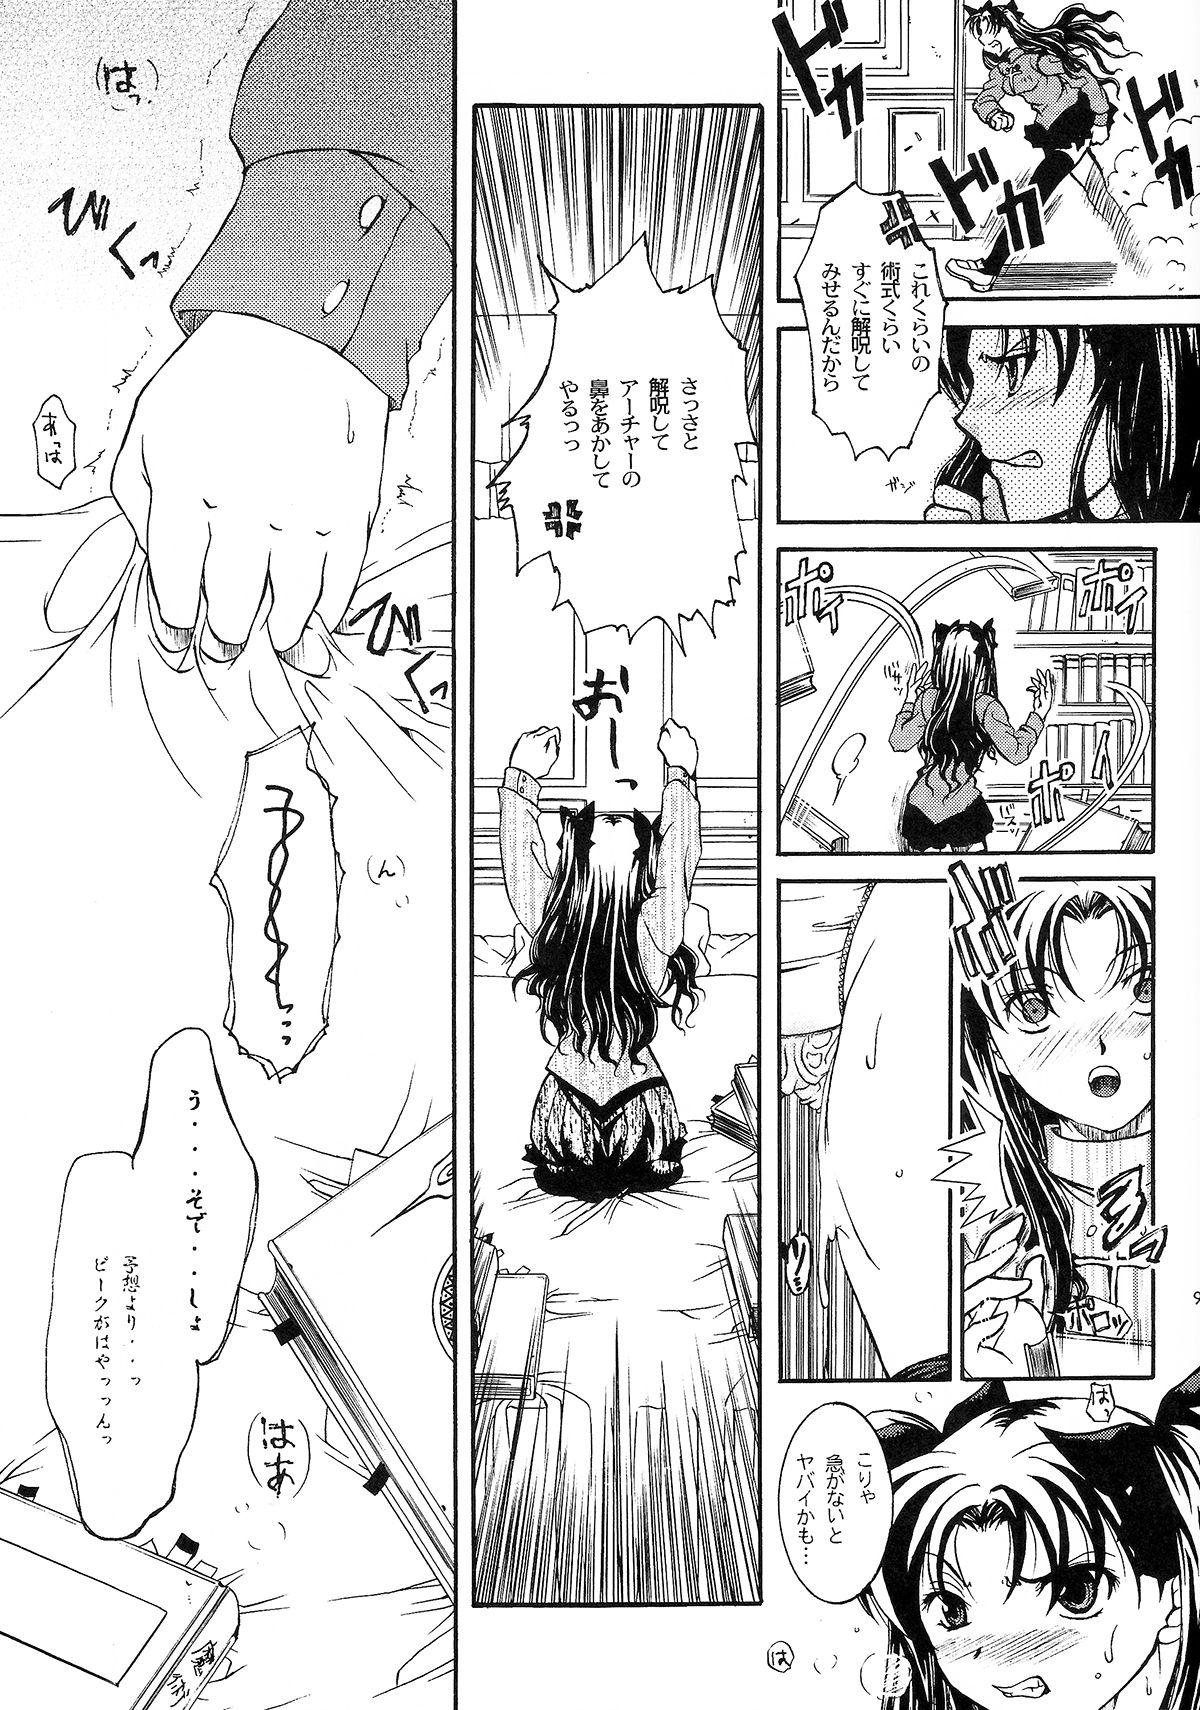 Spy Camera Hajimari no Yoru ni - Fate stay night Stepdaughter - Page 8